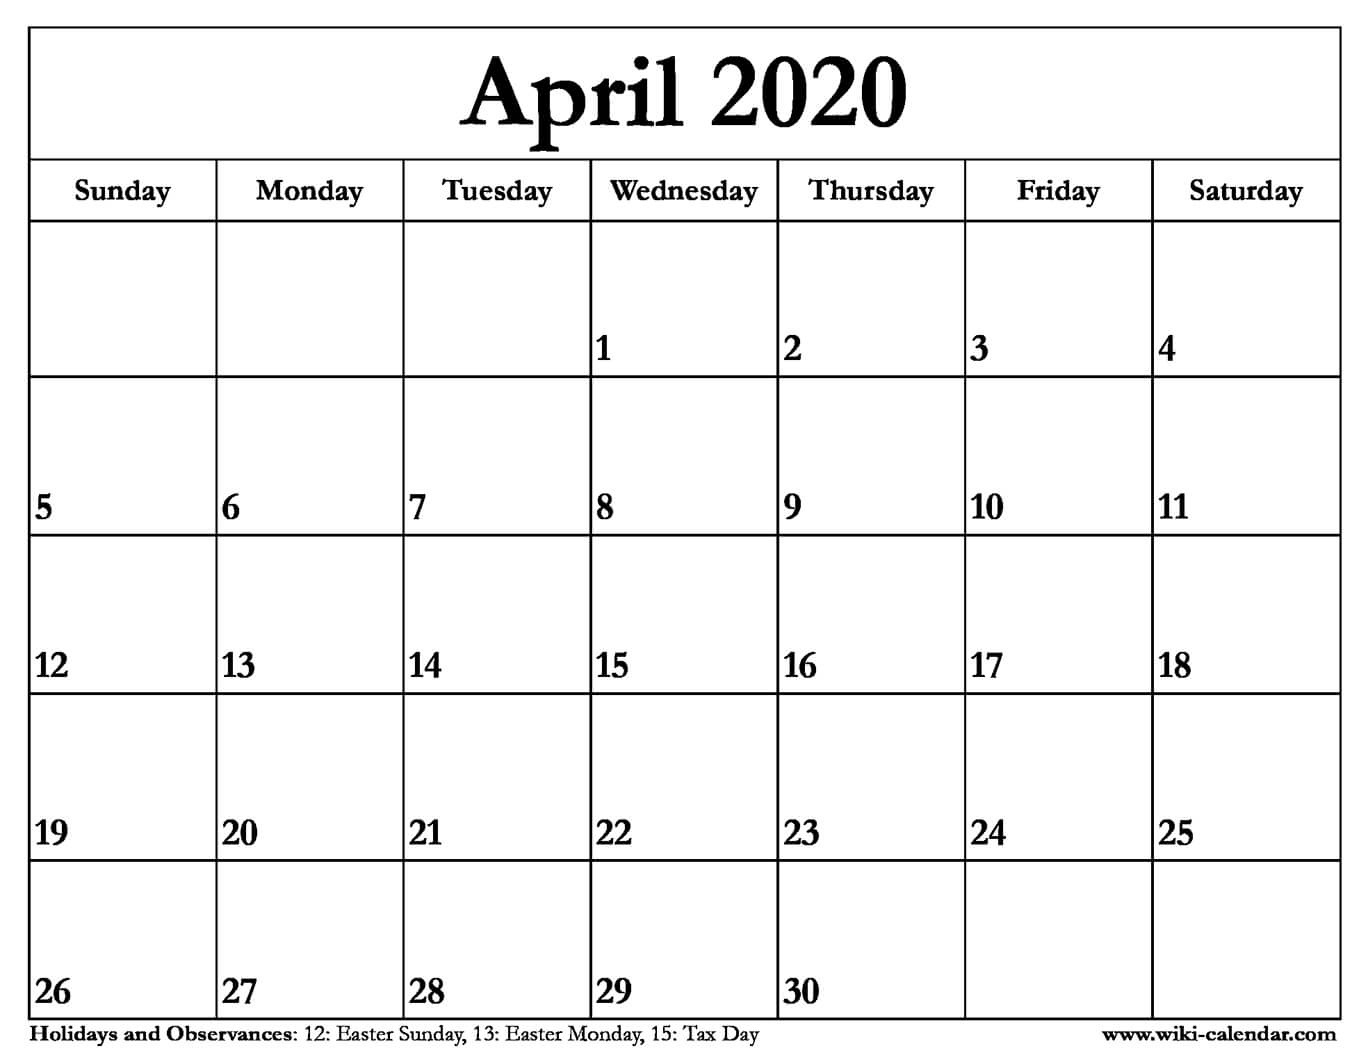 April 2020 Calendar Easter | Calendar Template Information April 2020 Calendar Easter